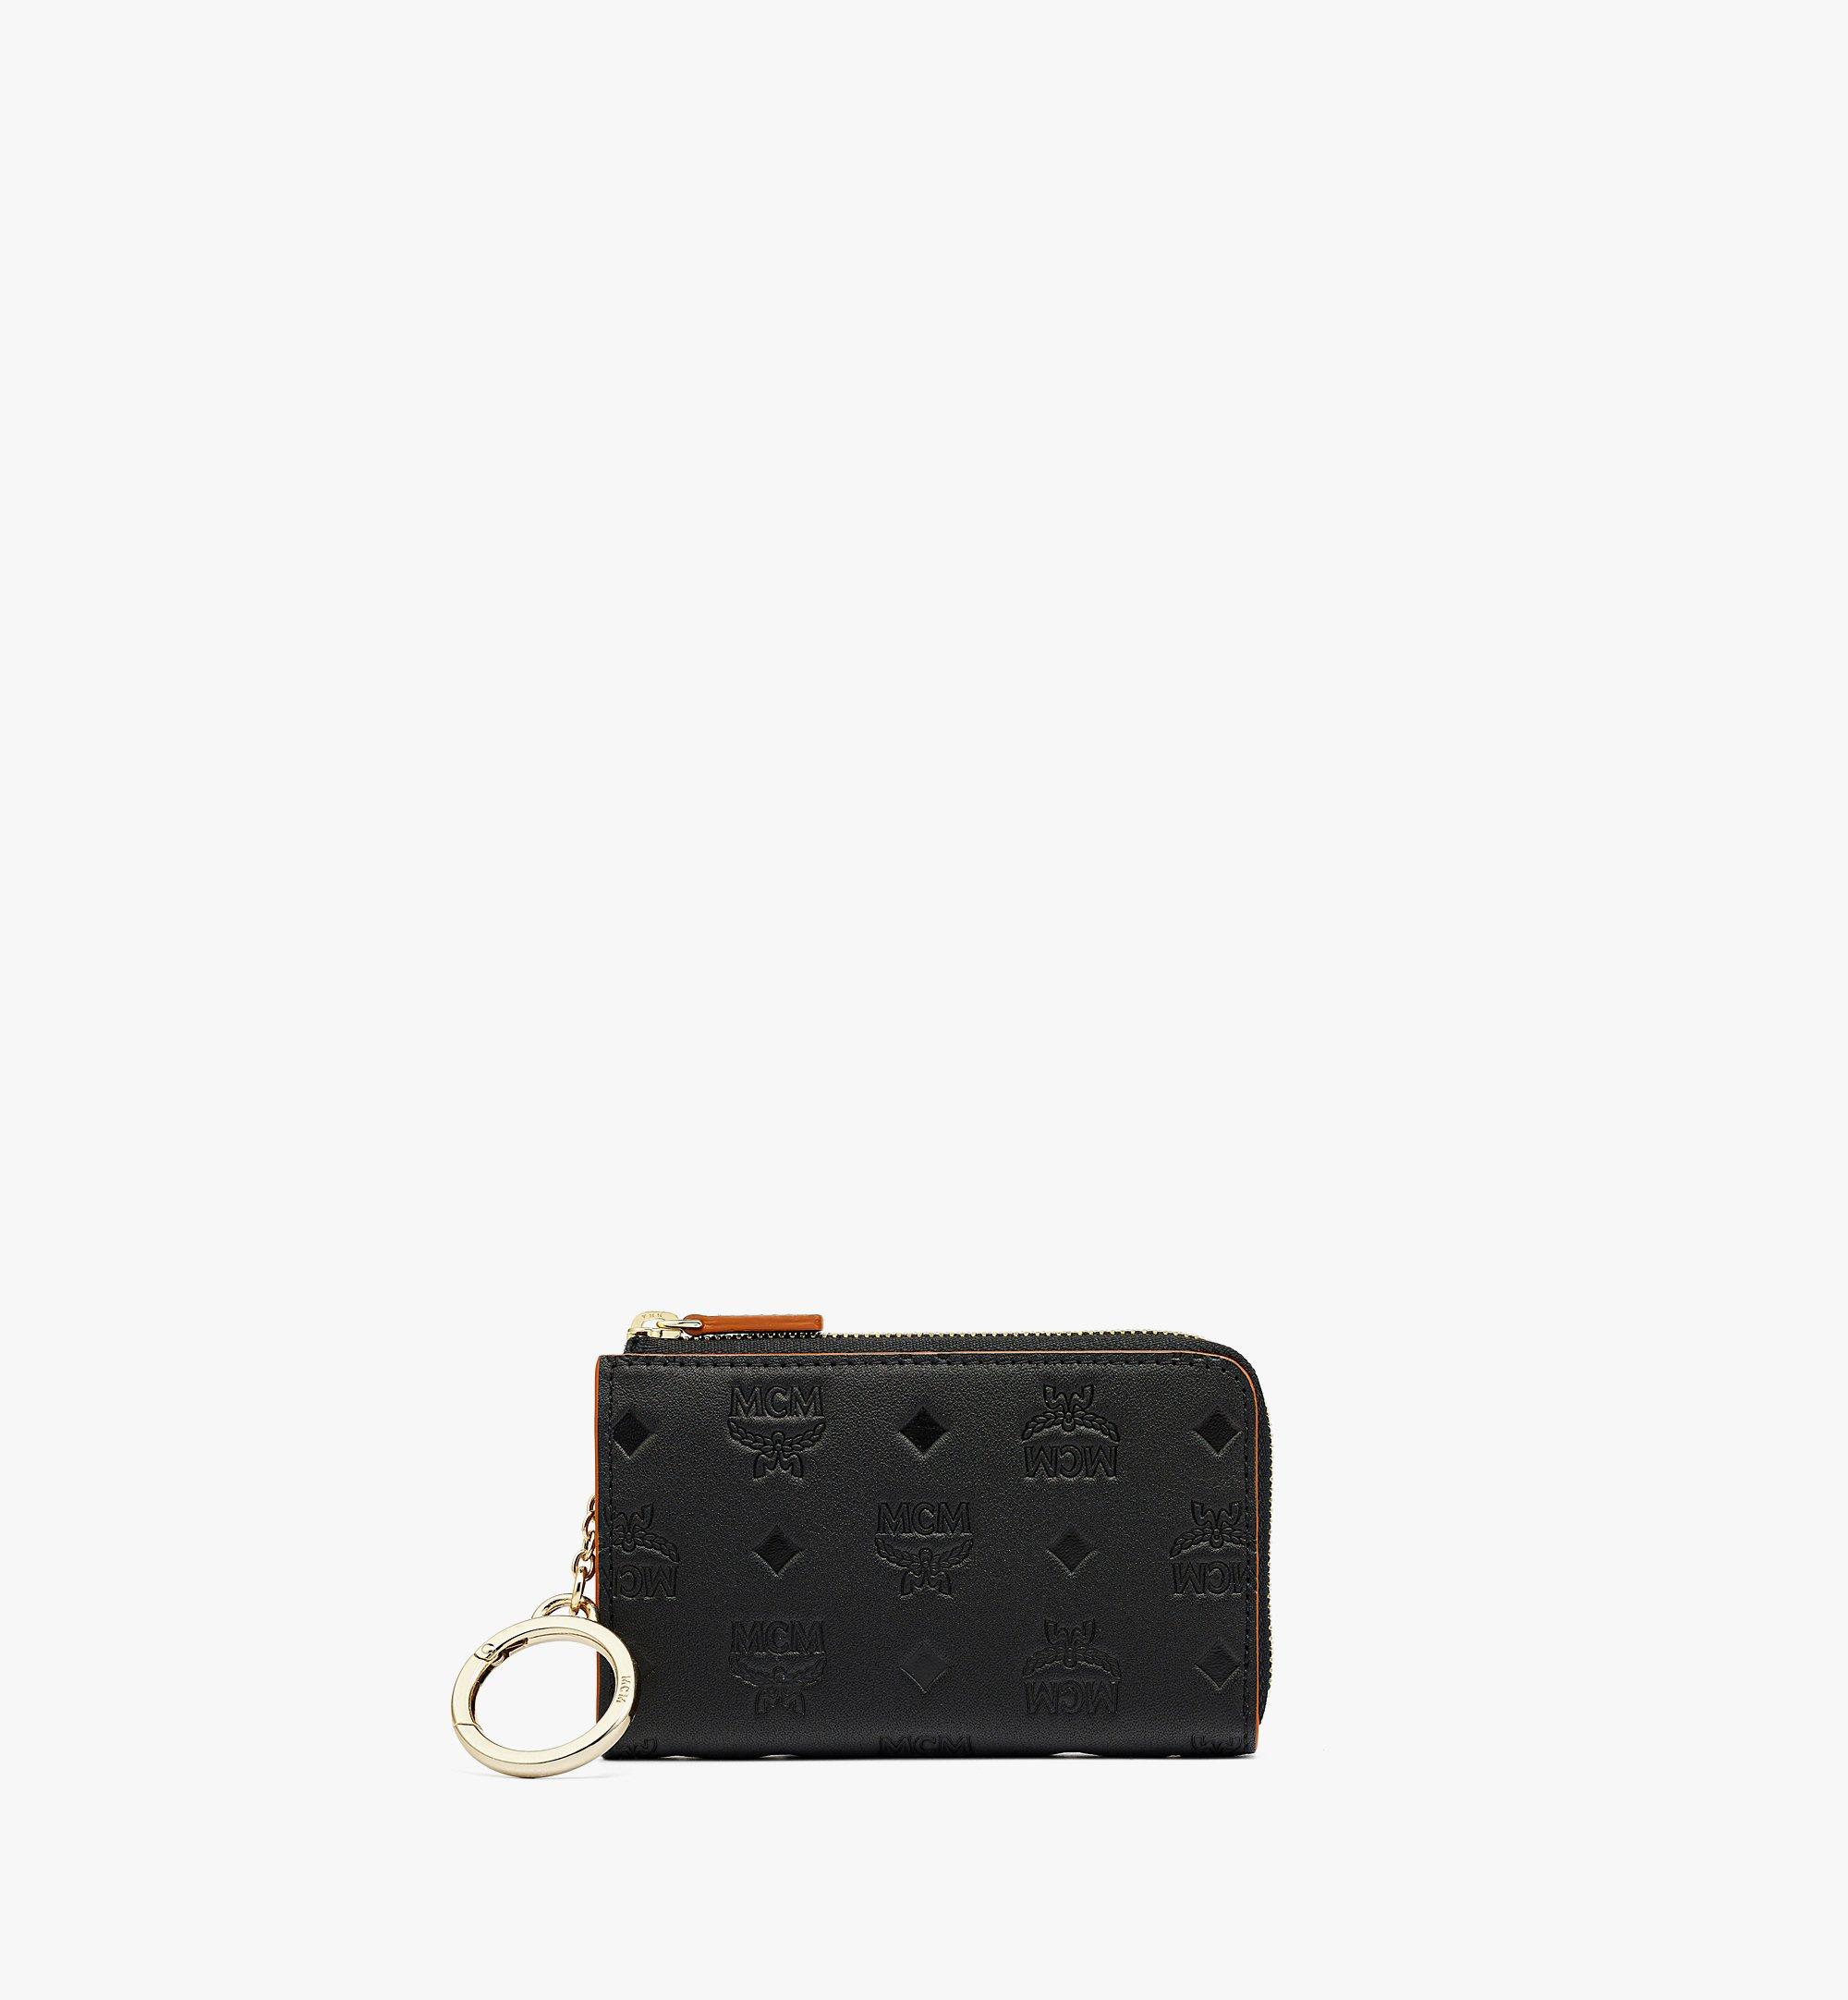 Wallets & purses Mcm - Milla grained leather wallet - MYL6SMA14PU001